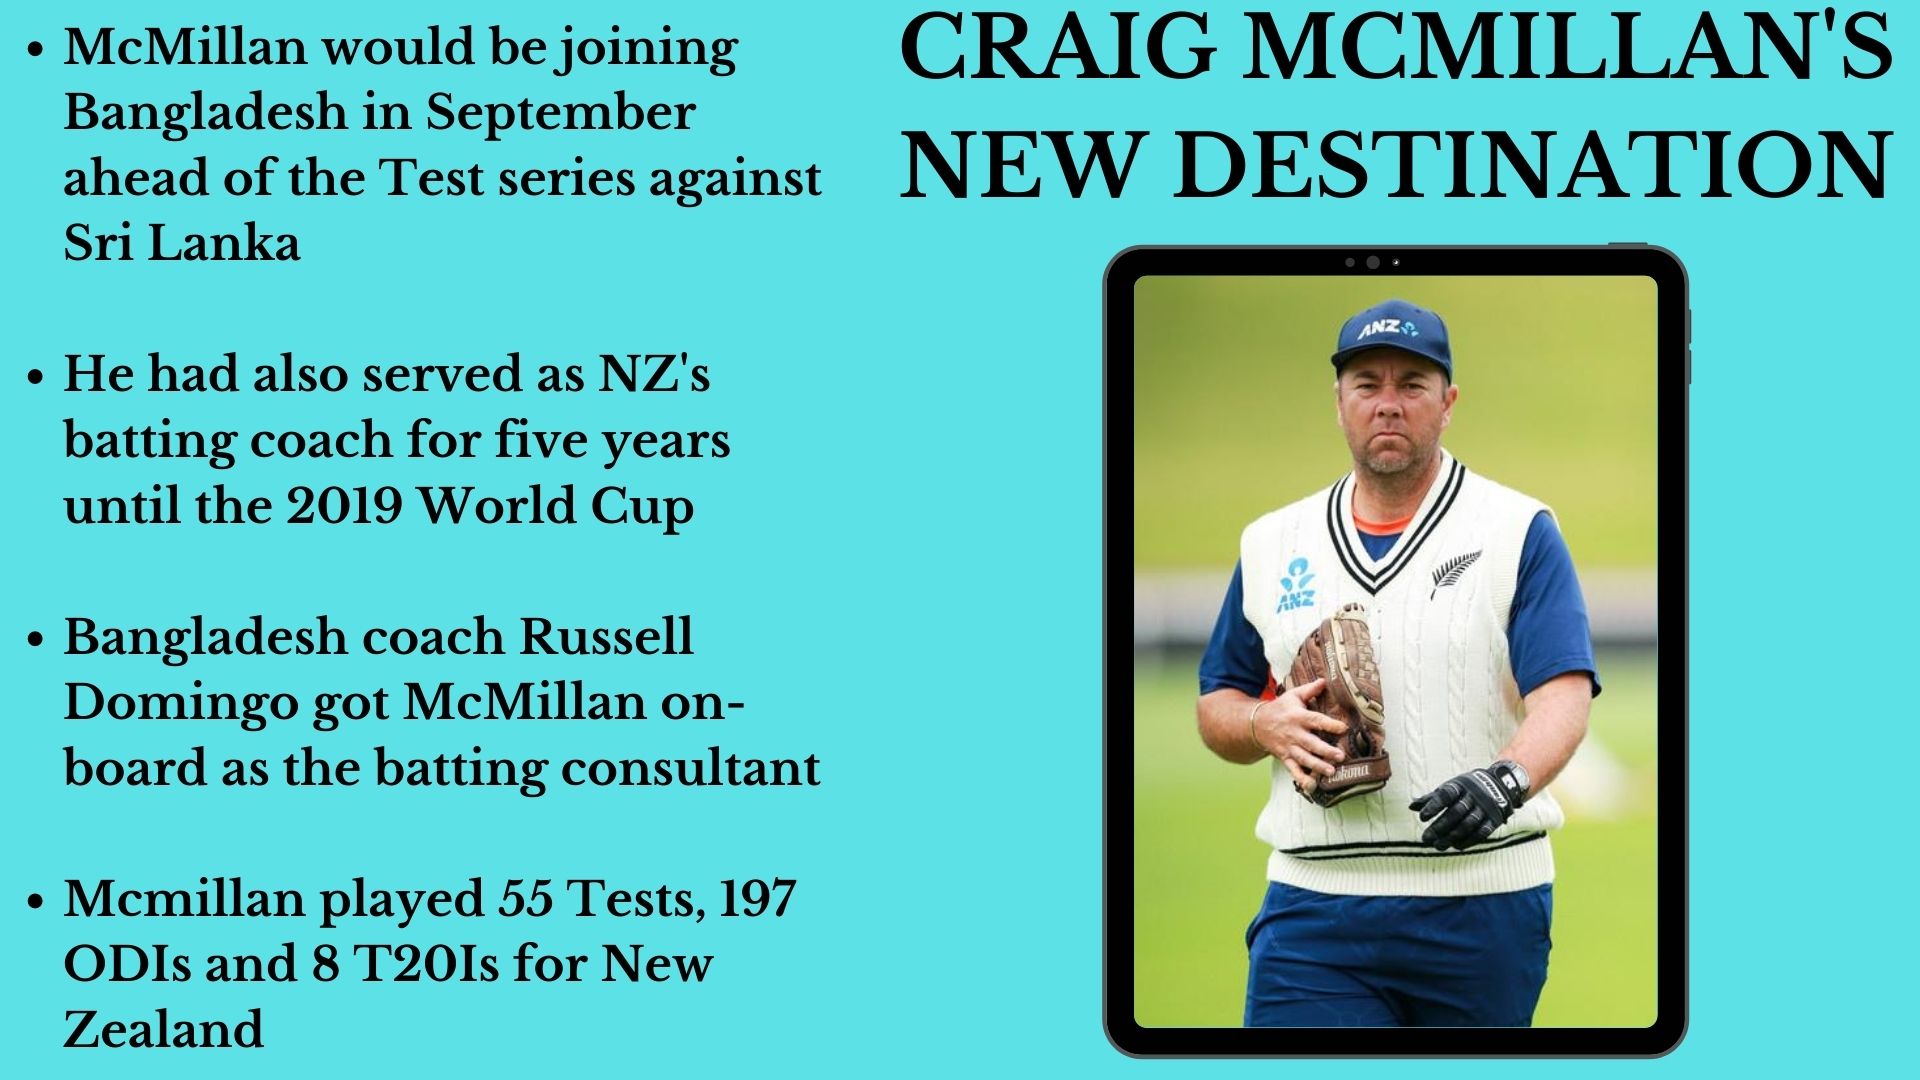 Craig McMillan will join Bangladesh team in September.